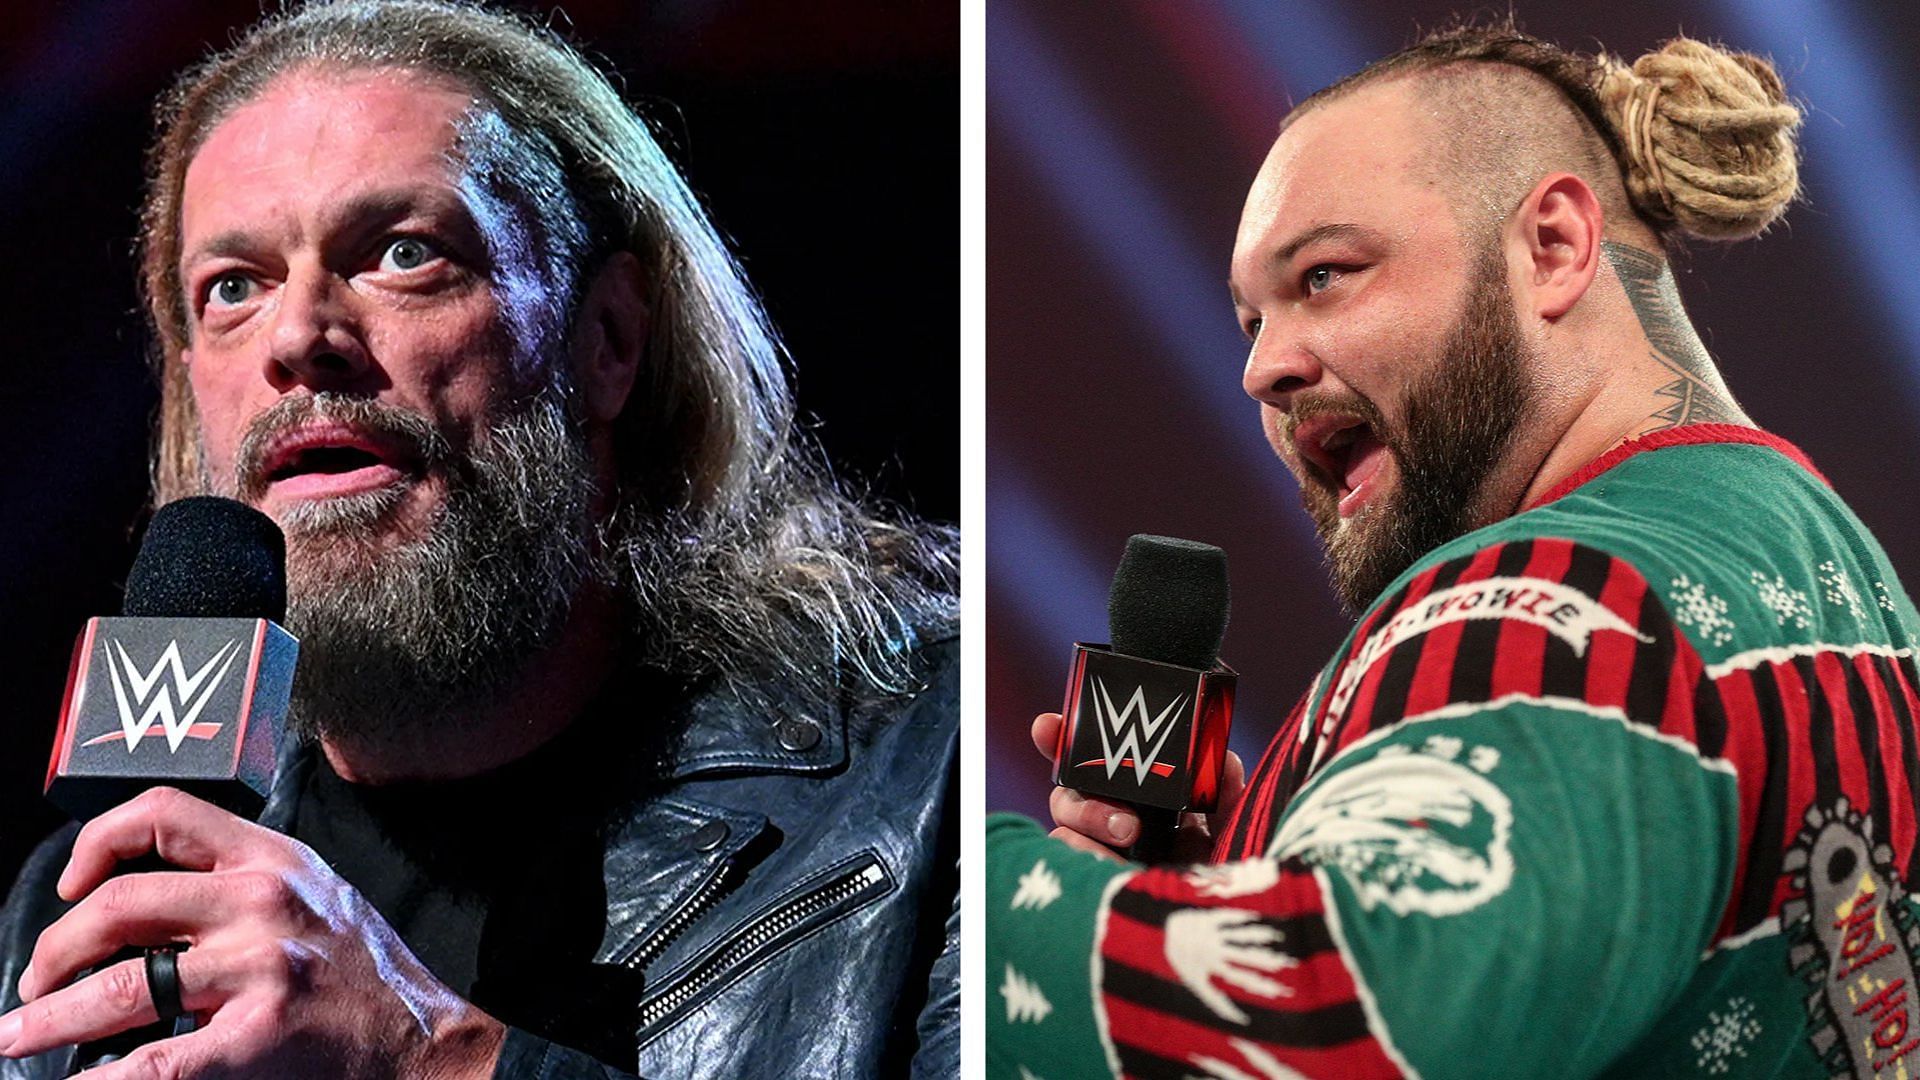 Edge may return before WWE SummerSlam